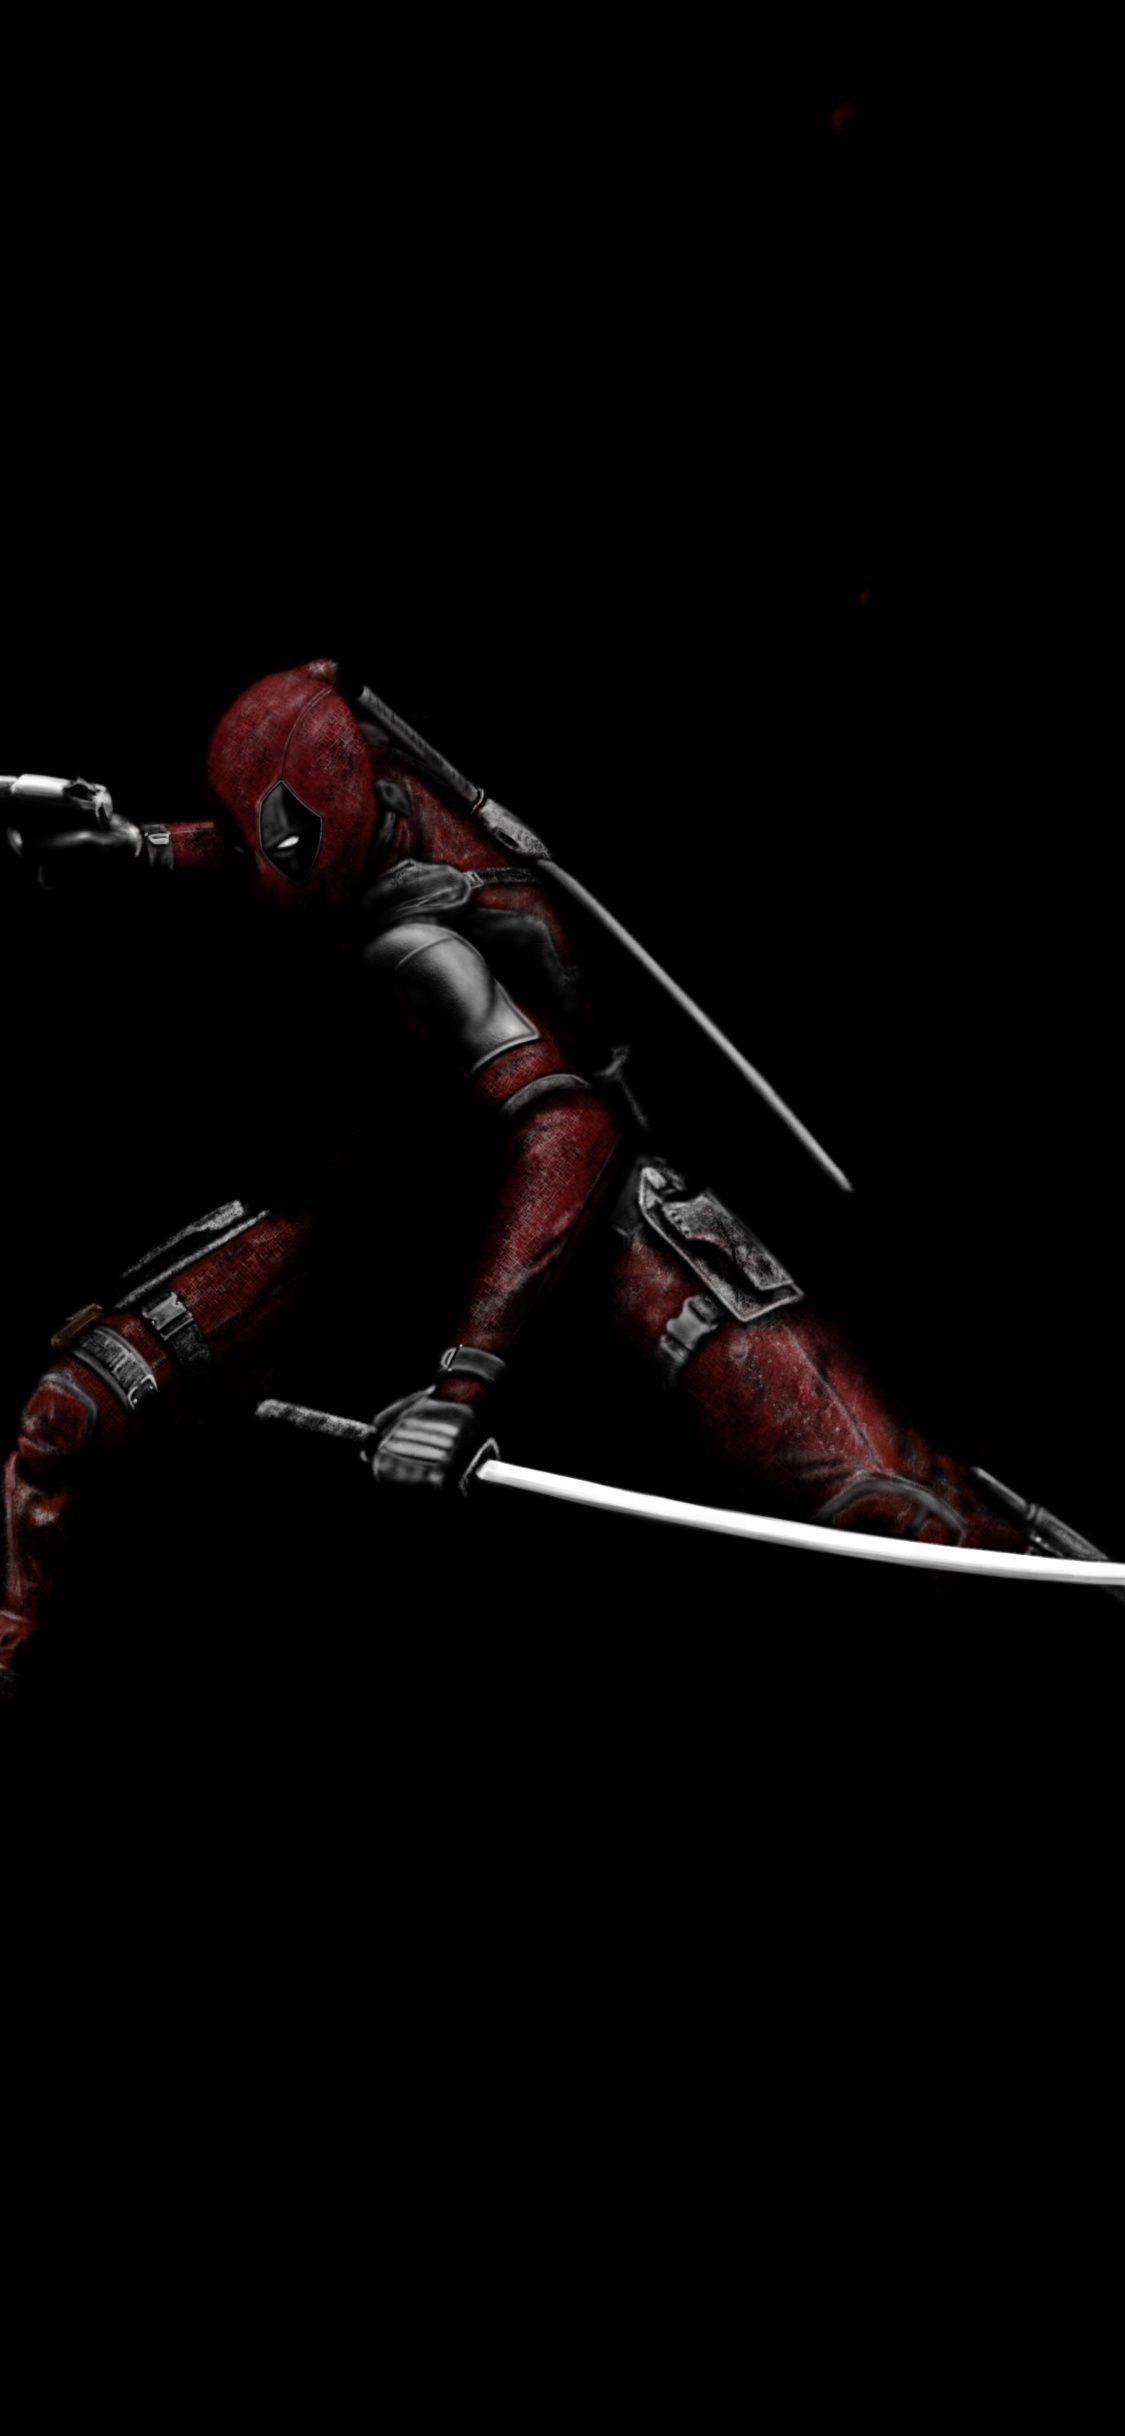 Deadpool with swords, minimal, superhero, dark, art wallpaper, 7000x HD image, picture, 3c6ae785